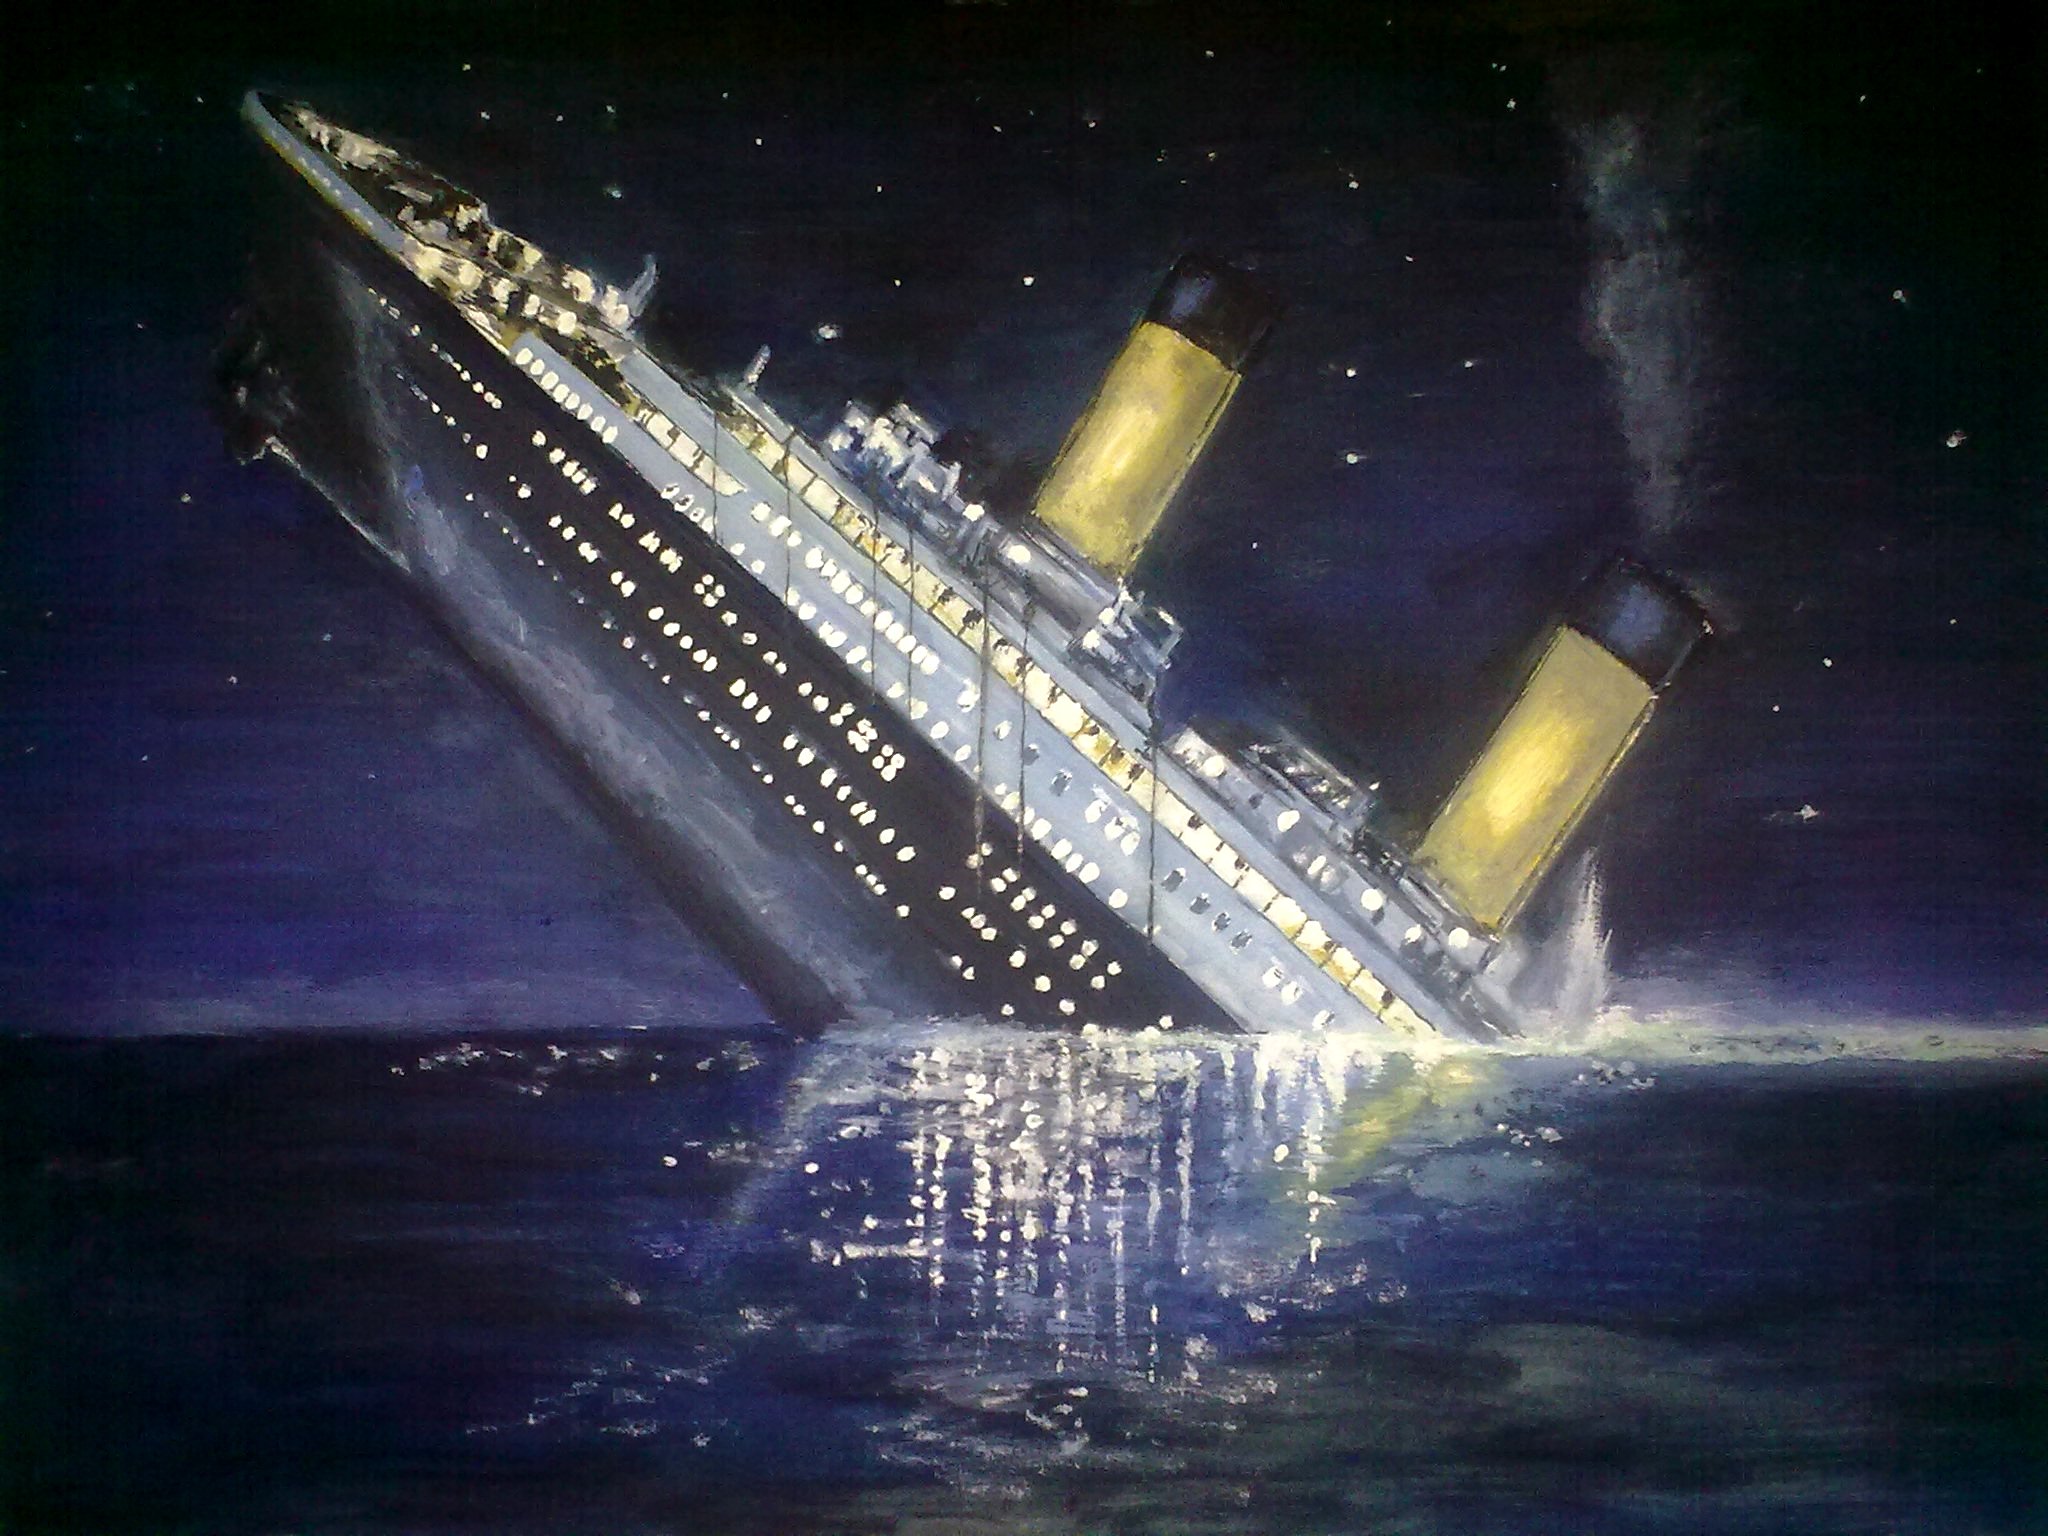 76 Titanic Sinking Wallpaper On Wallpapersafari